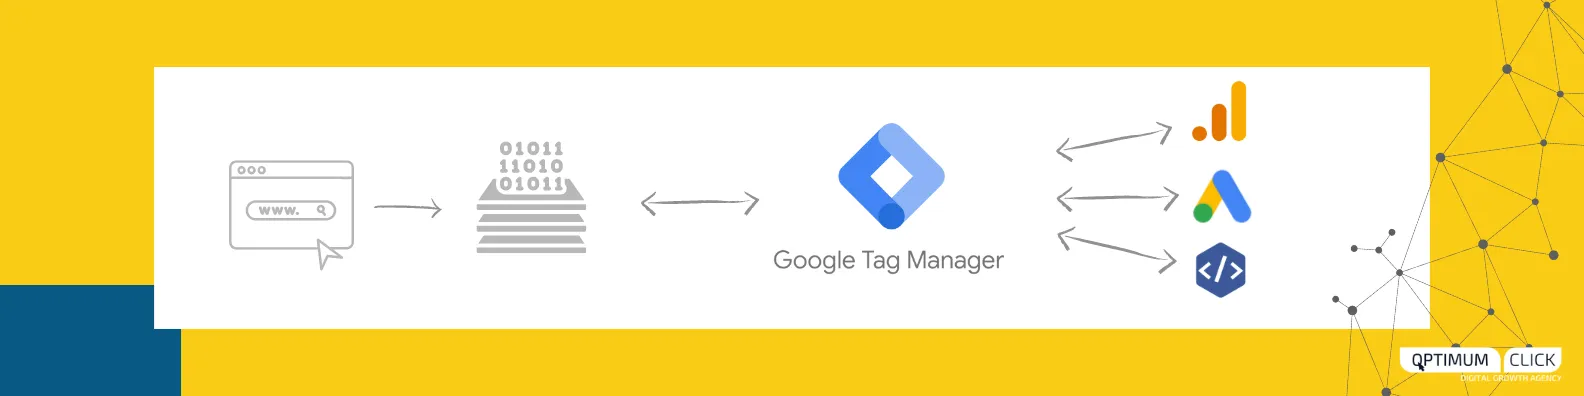 Google Tag Manager vs Google Analytics 4